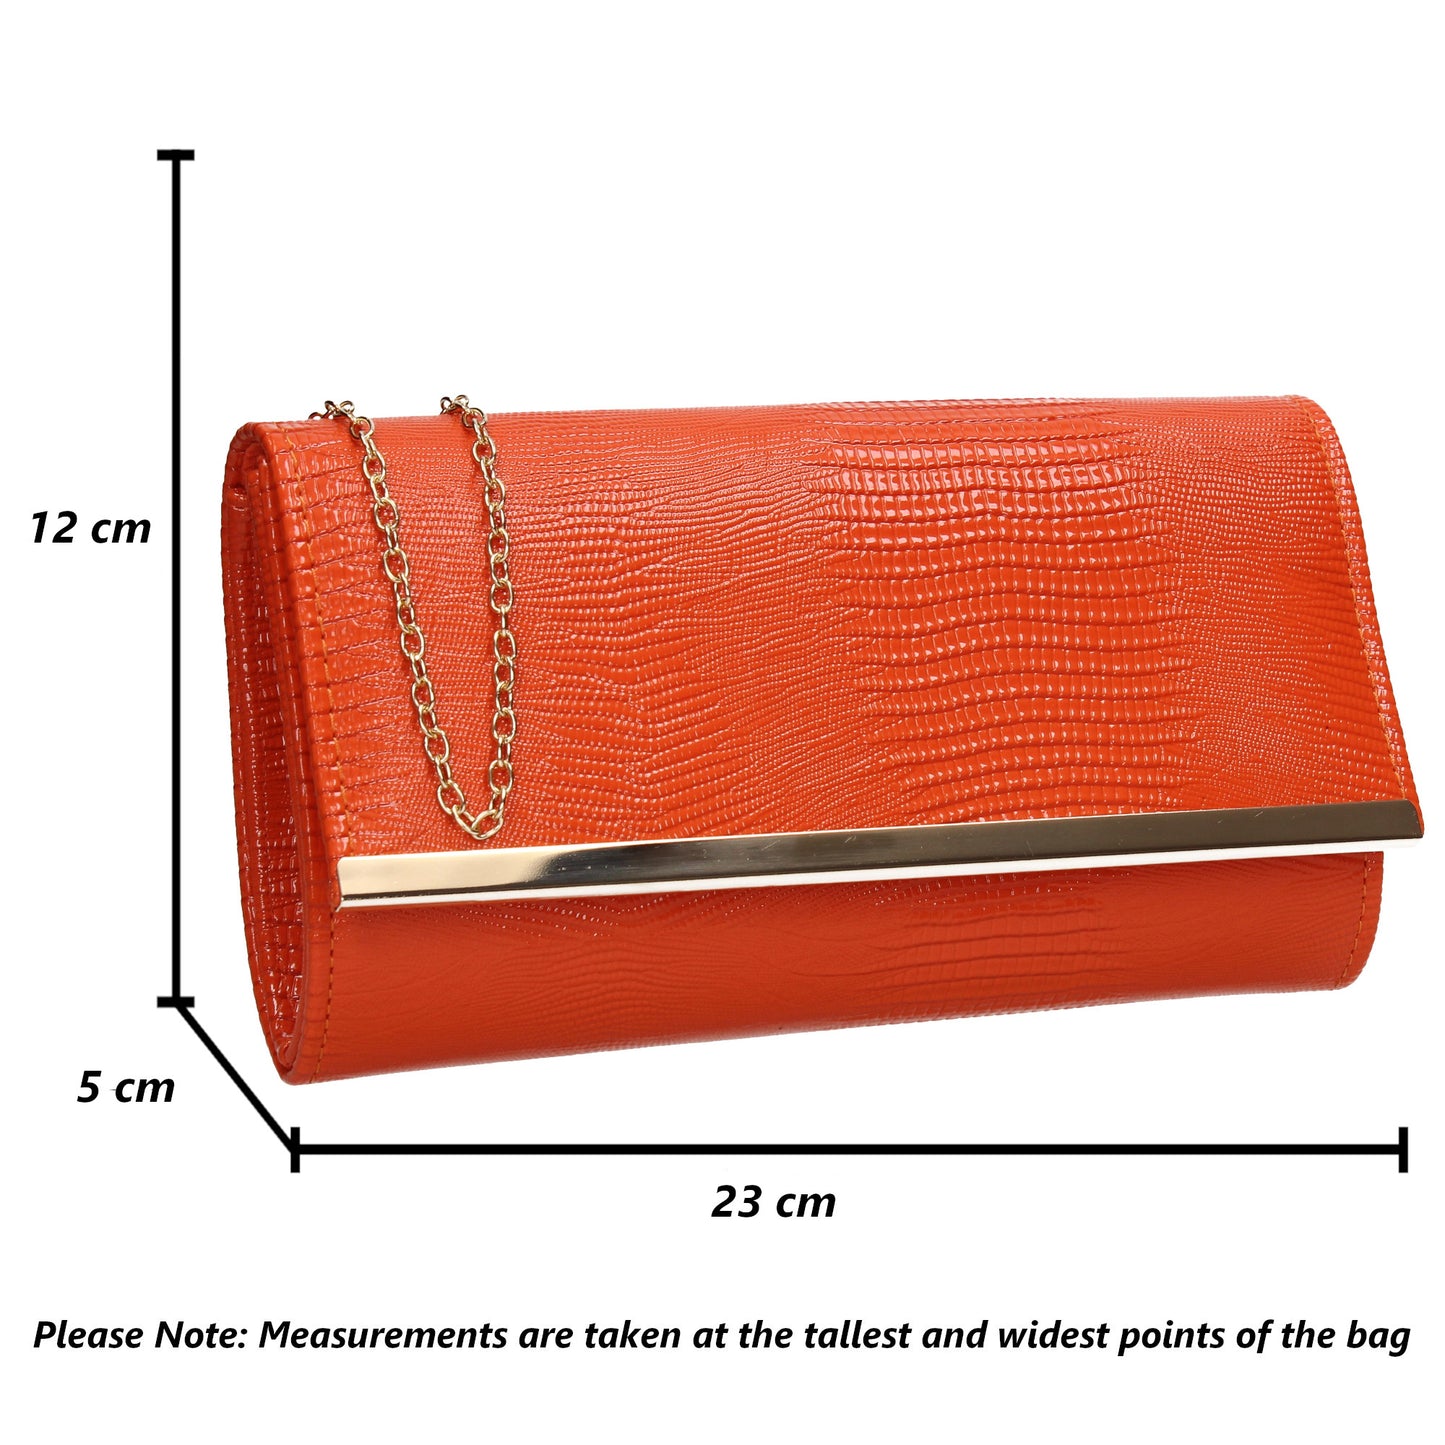 Ronai Flapover Faux Leather Clutch Bag Scarlet Orange